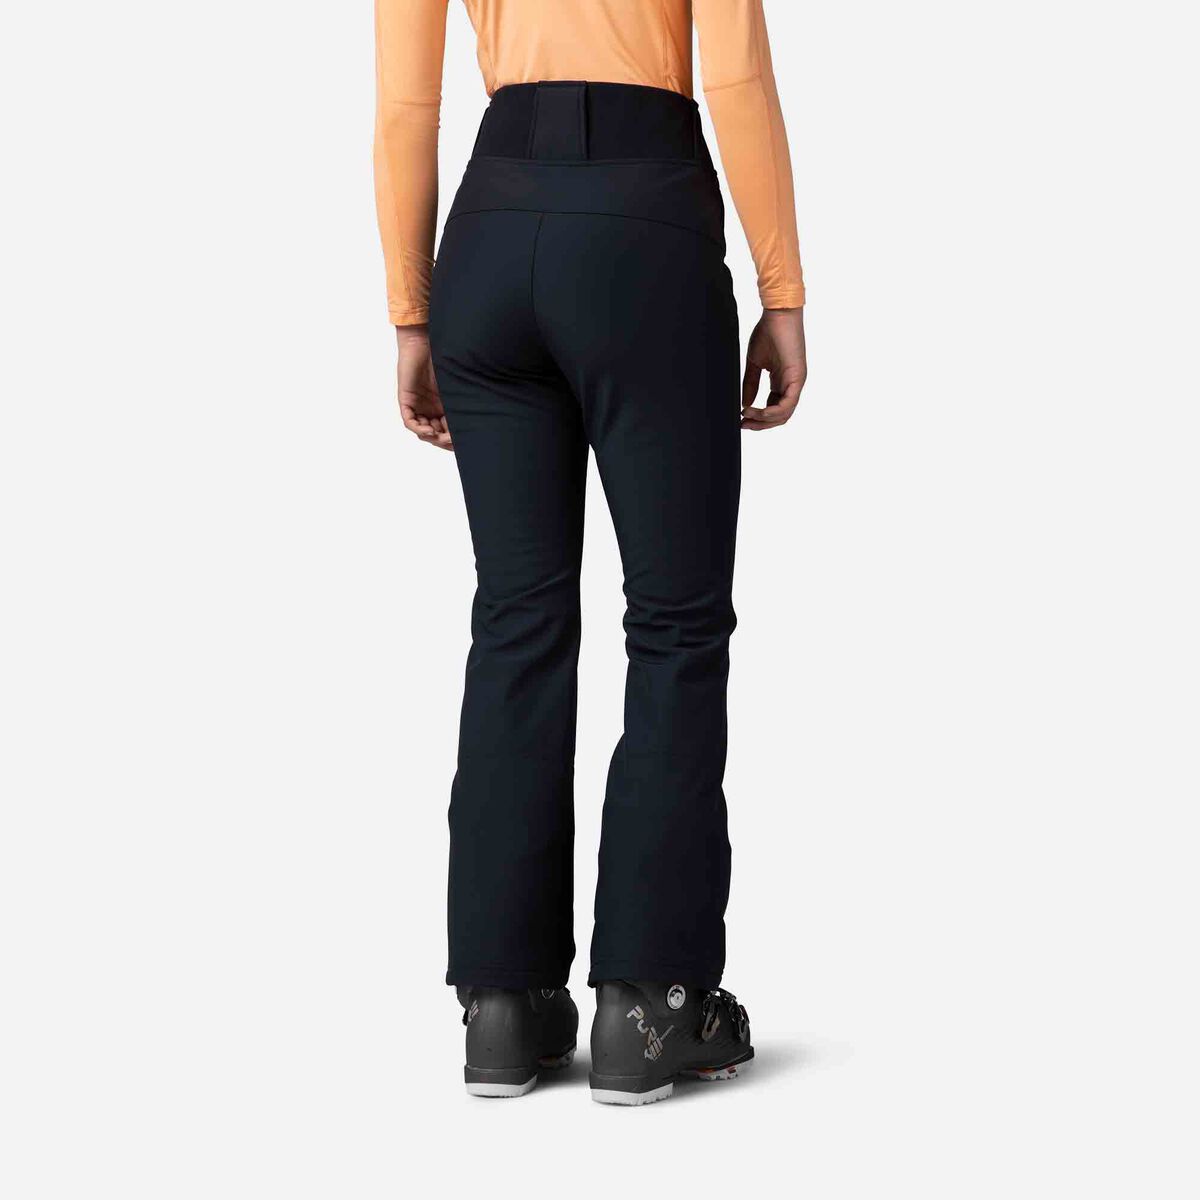 Rossignol Women's Soft Shell Ski pants Black